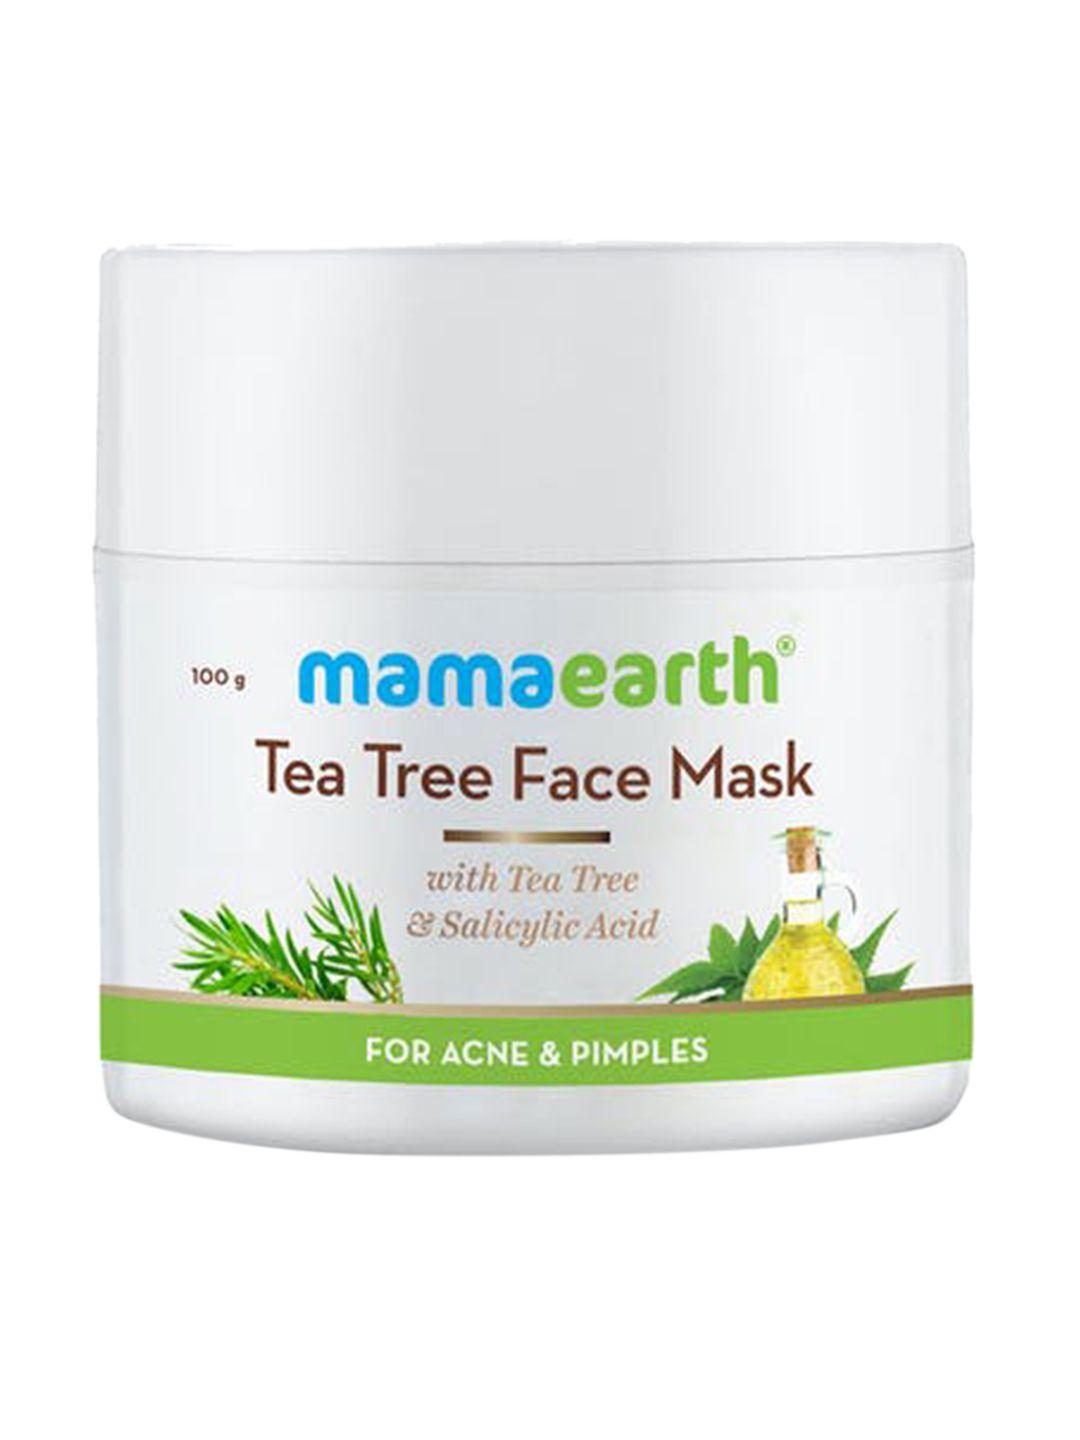 mamaearth tea tree face mask with tea tree & salicylic acid - 100 g